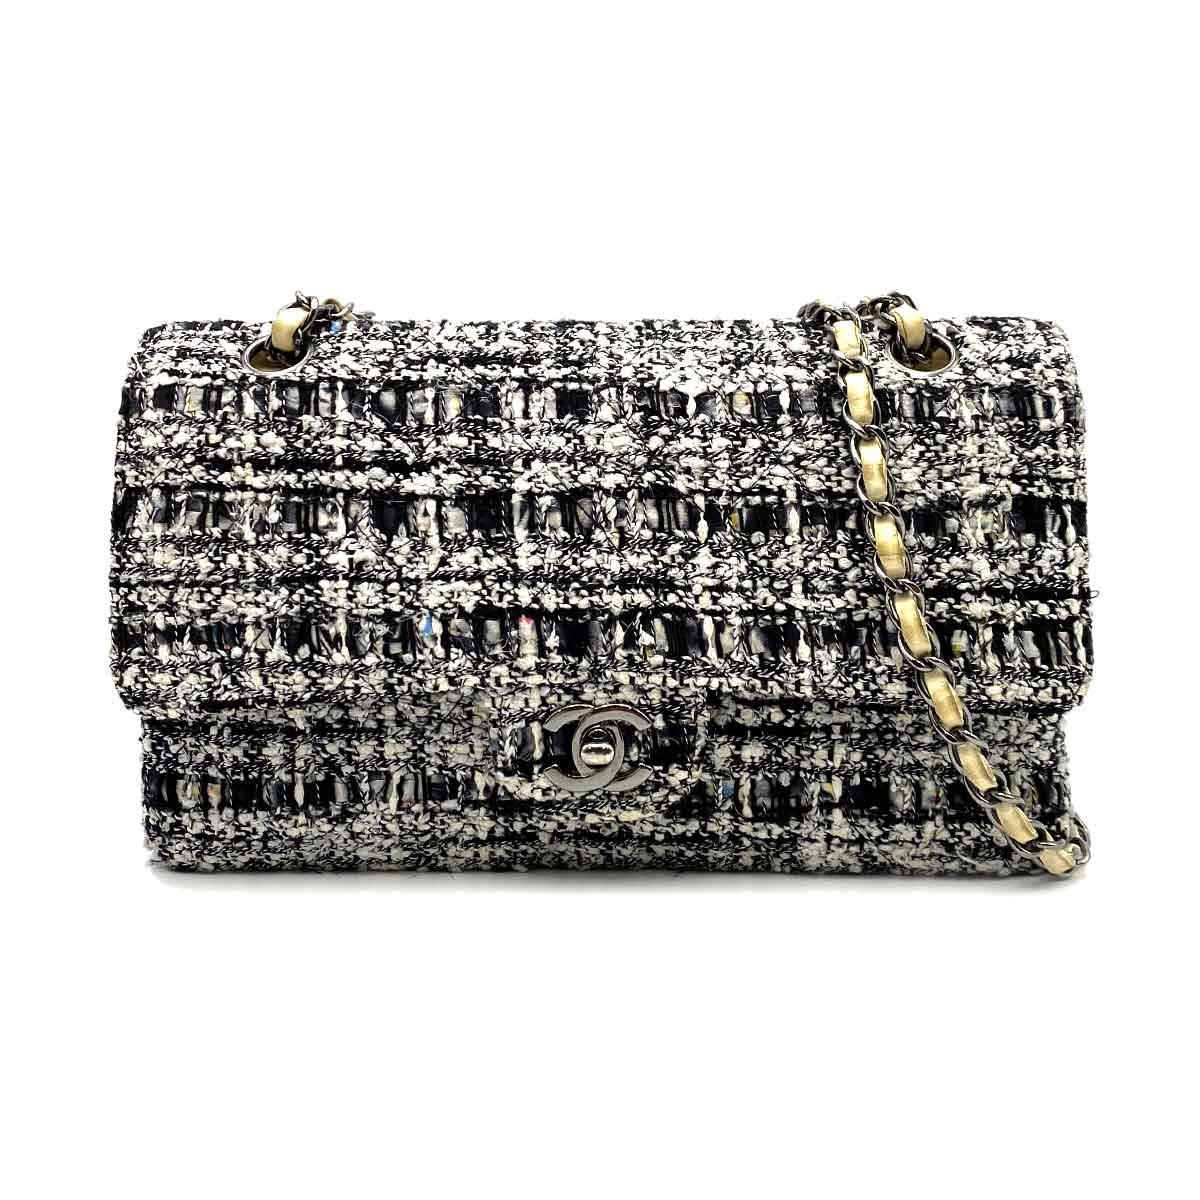 Chanel CHANEL VINTAGE CLASSIC FLAP MEDIUM CHAIN SHOULDER BAG BLACK WHITE TWEED 90225108